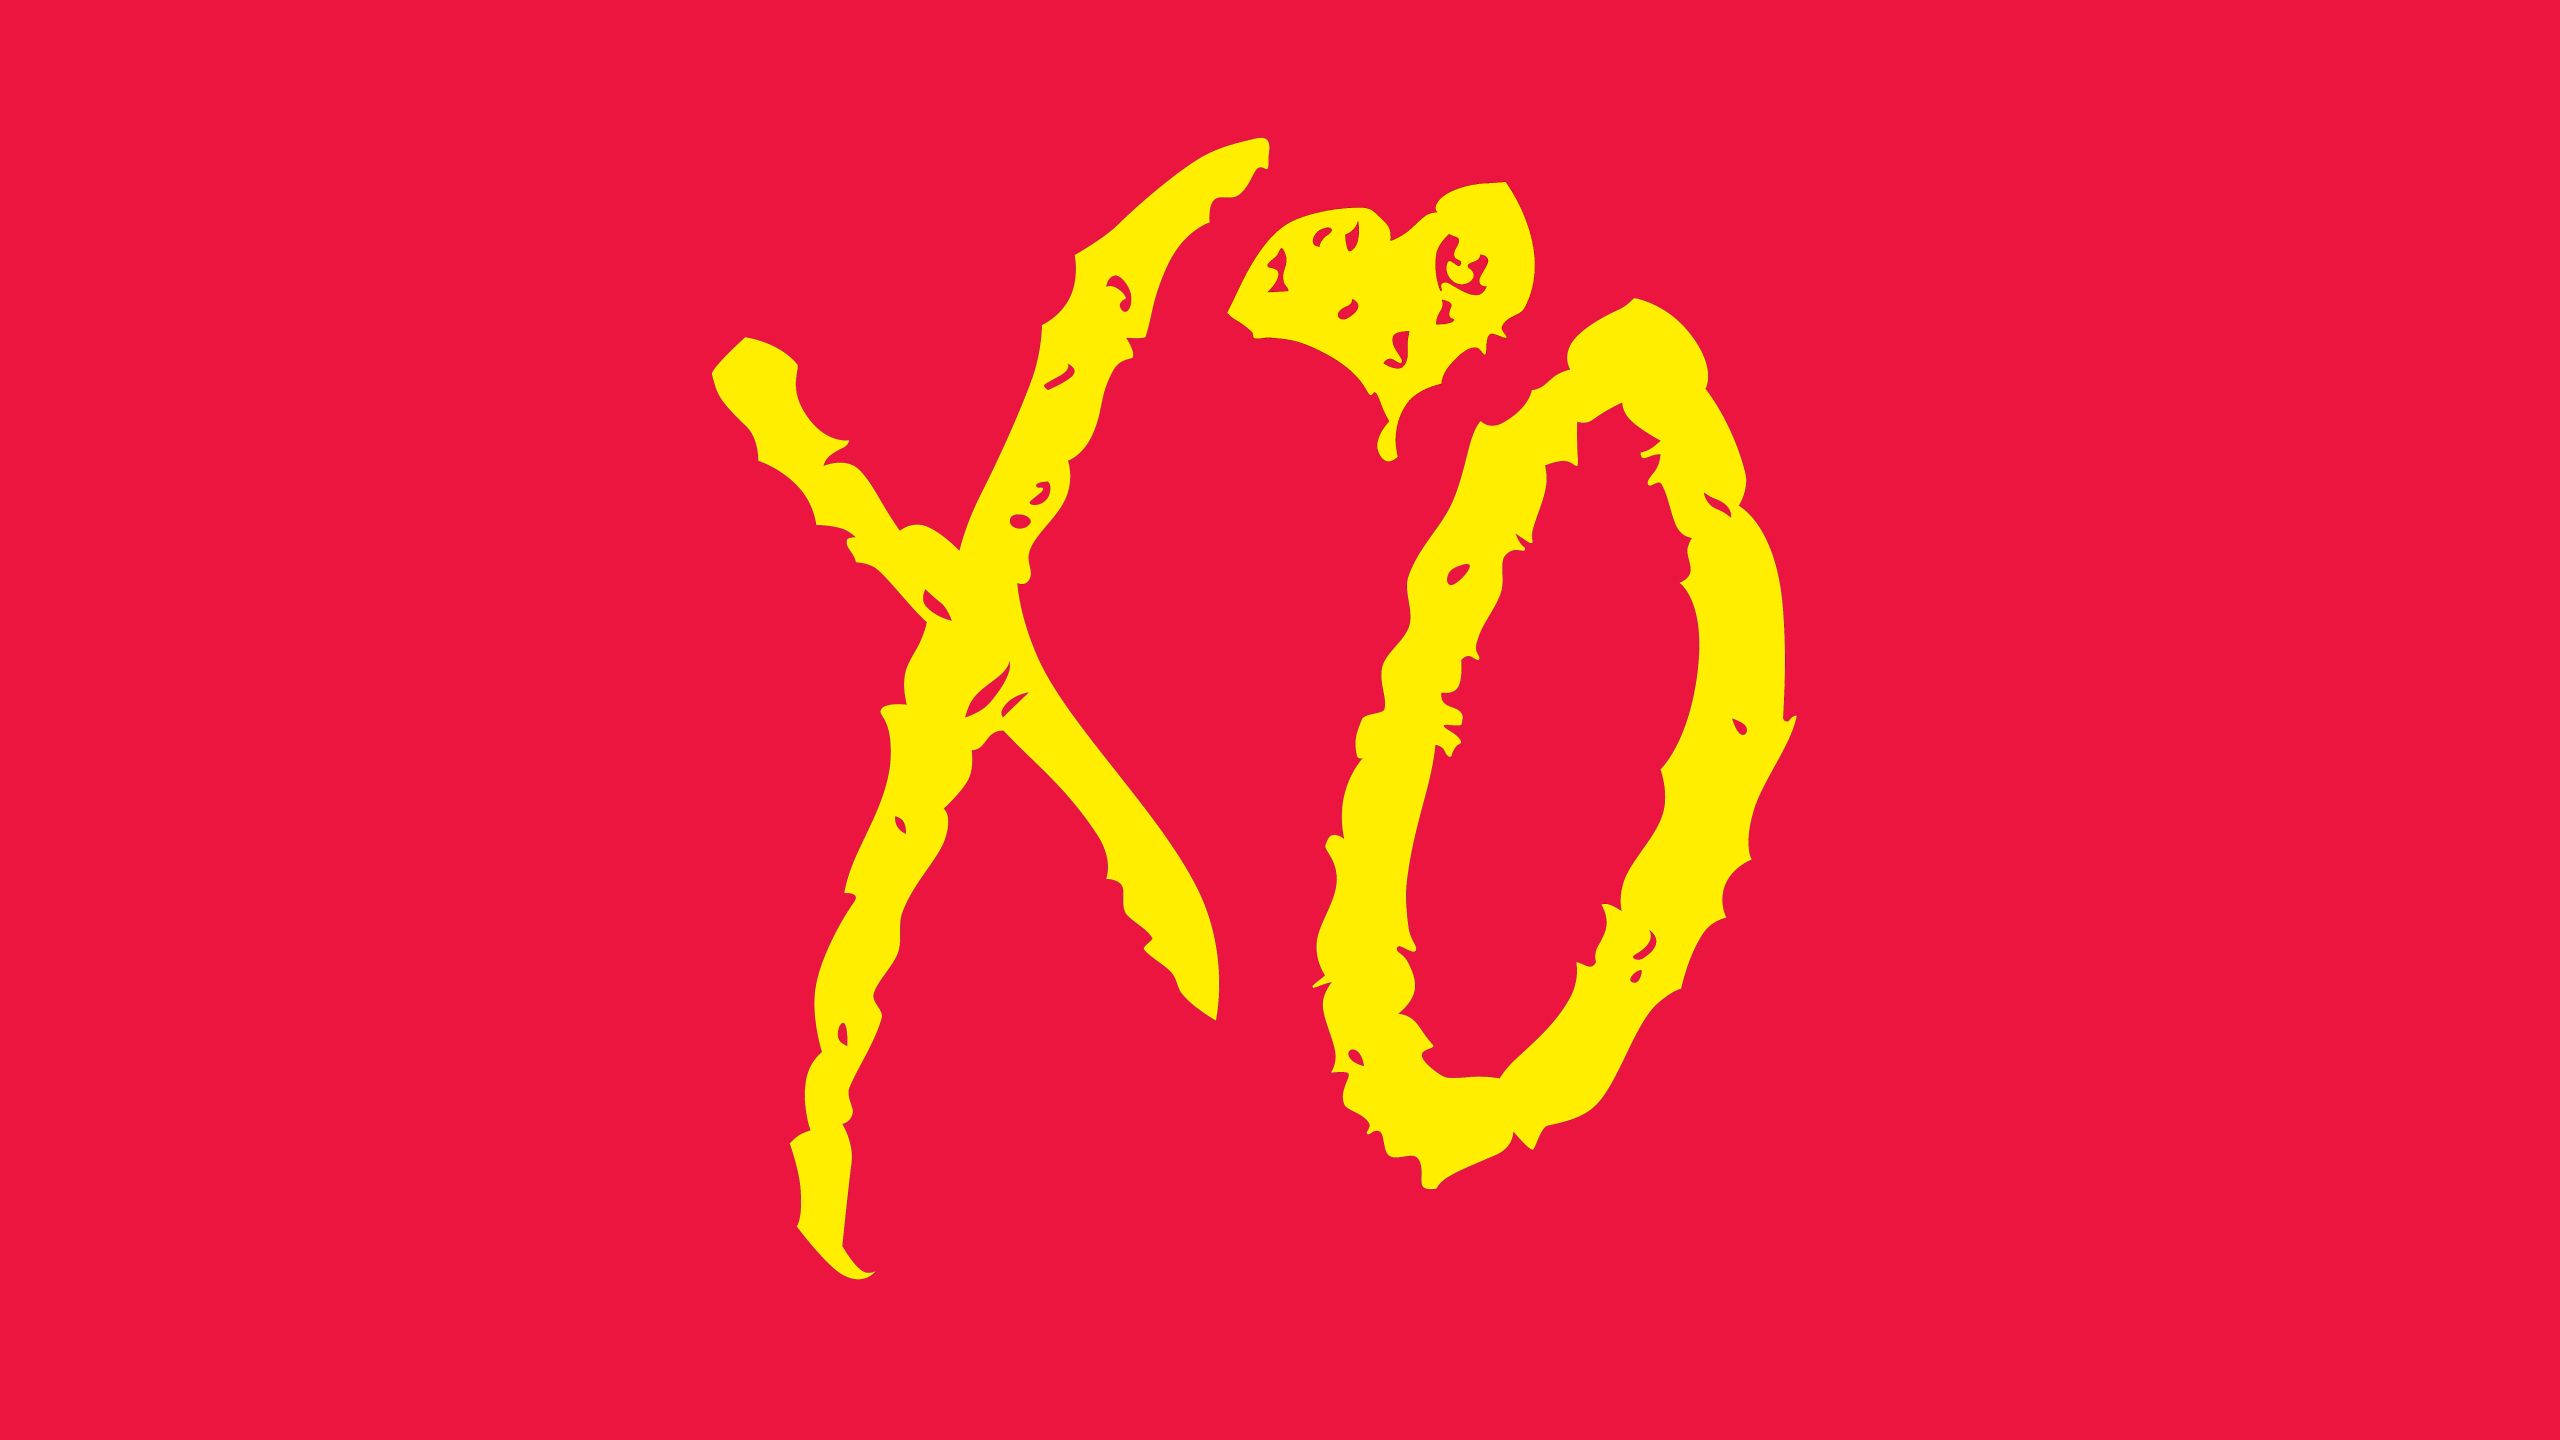 Xo Wallpaper. Xo Wallpaper, EXO Chibi Wallpaper and EXO Wallpaper